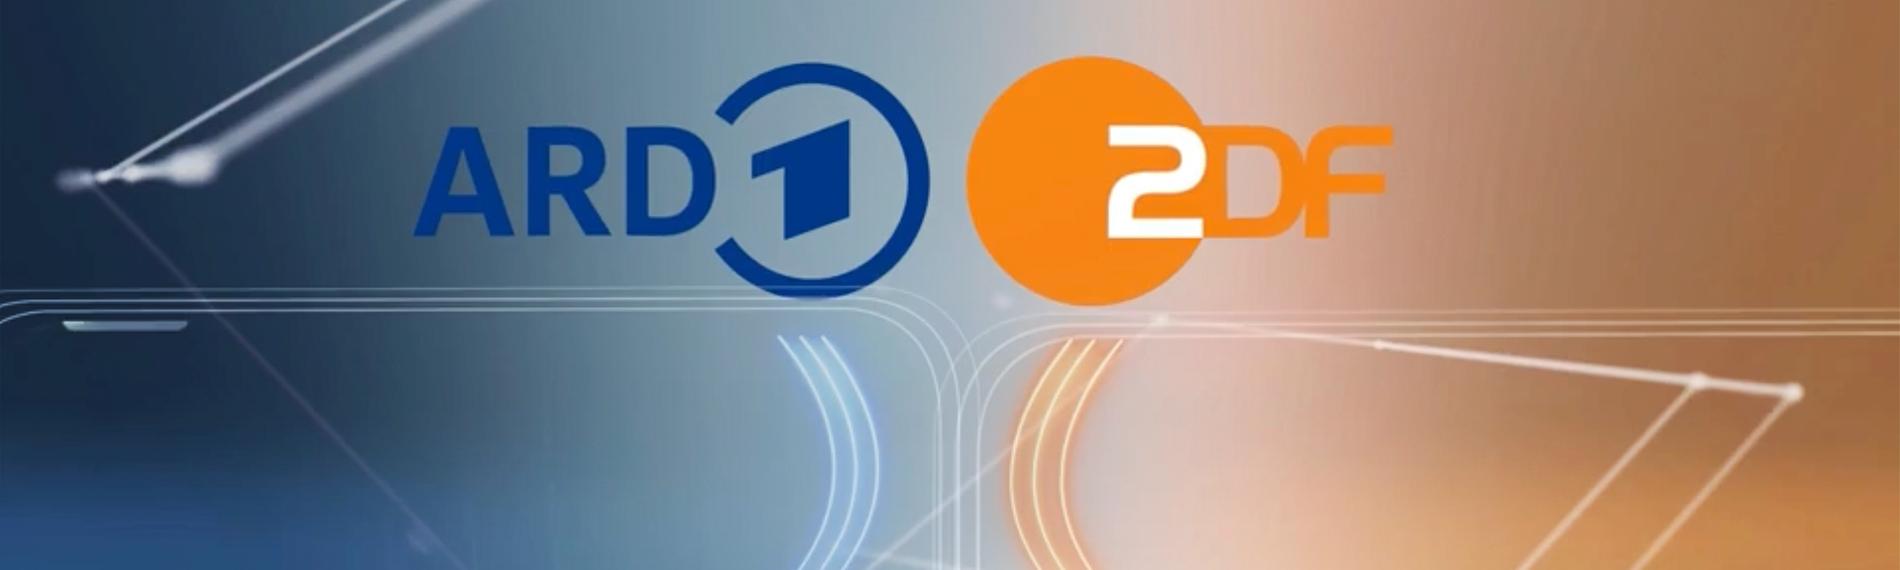 ARD/ZDF Mediathek 